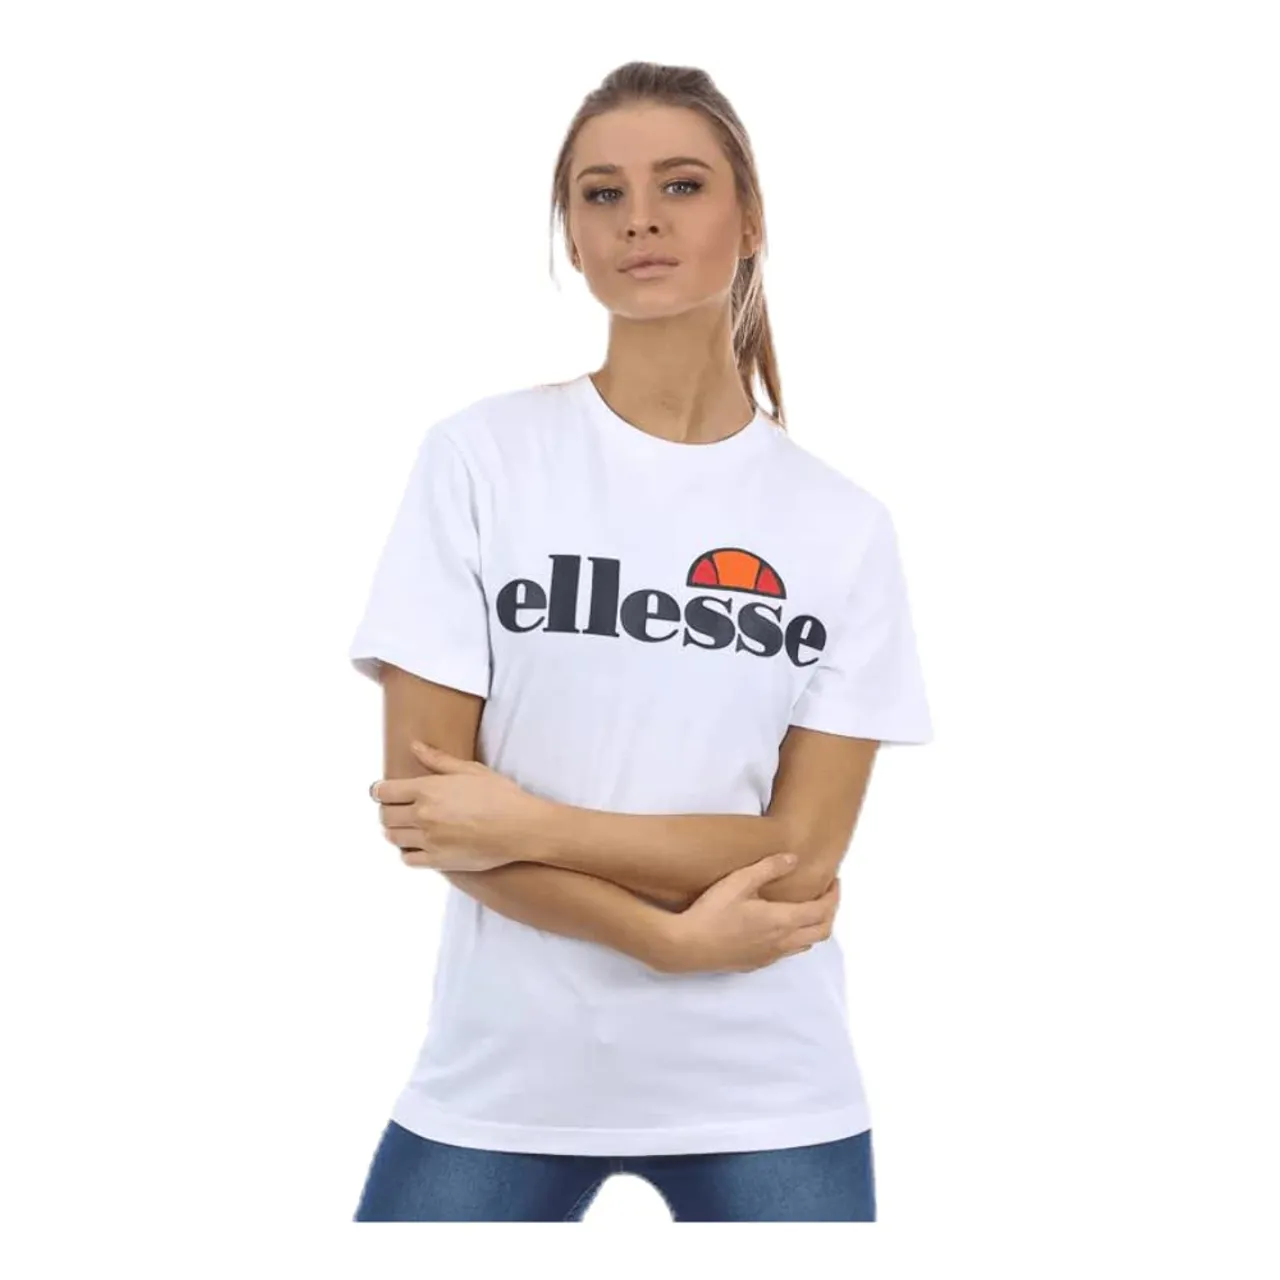 ellesse Women's Albany T-Shirt